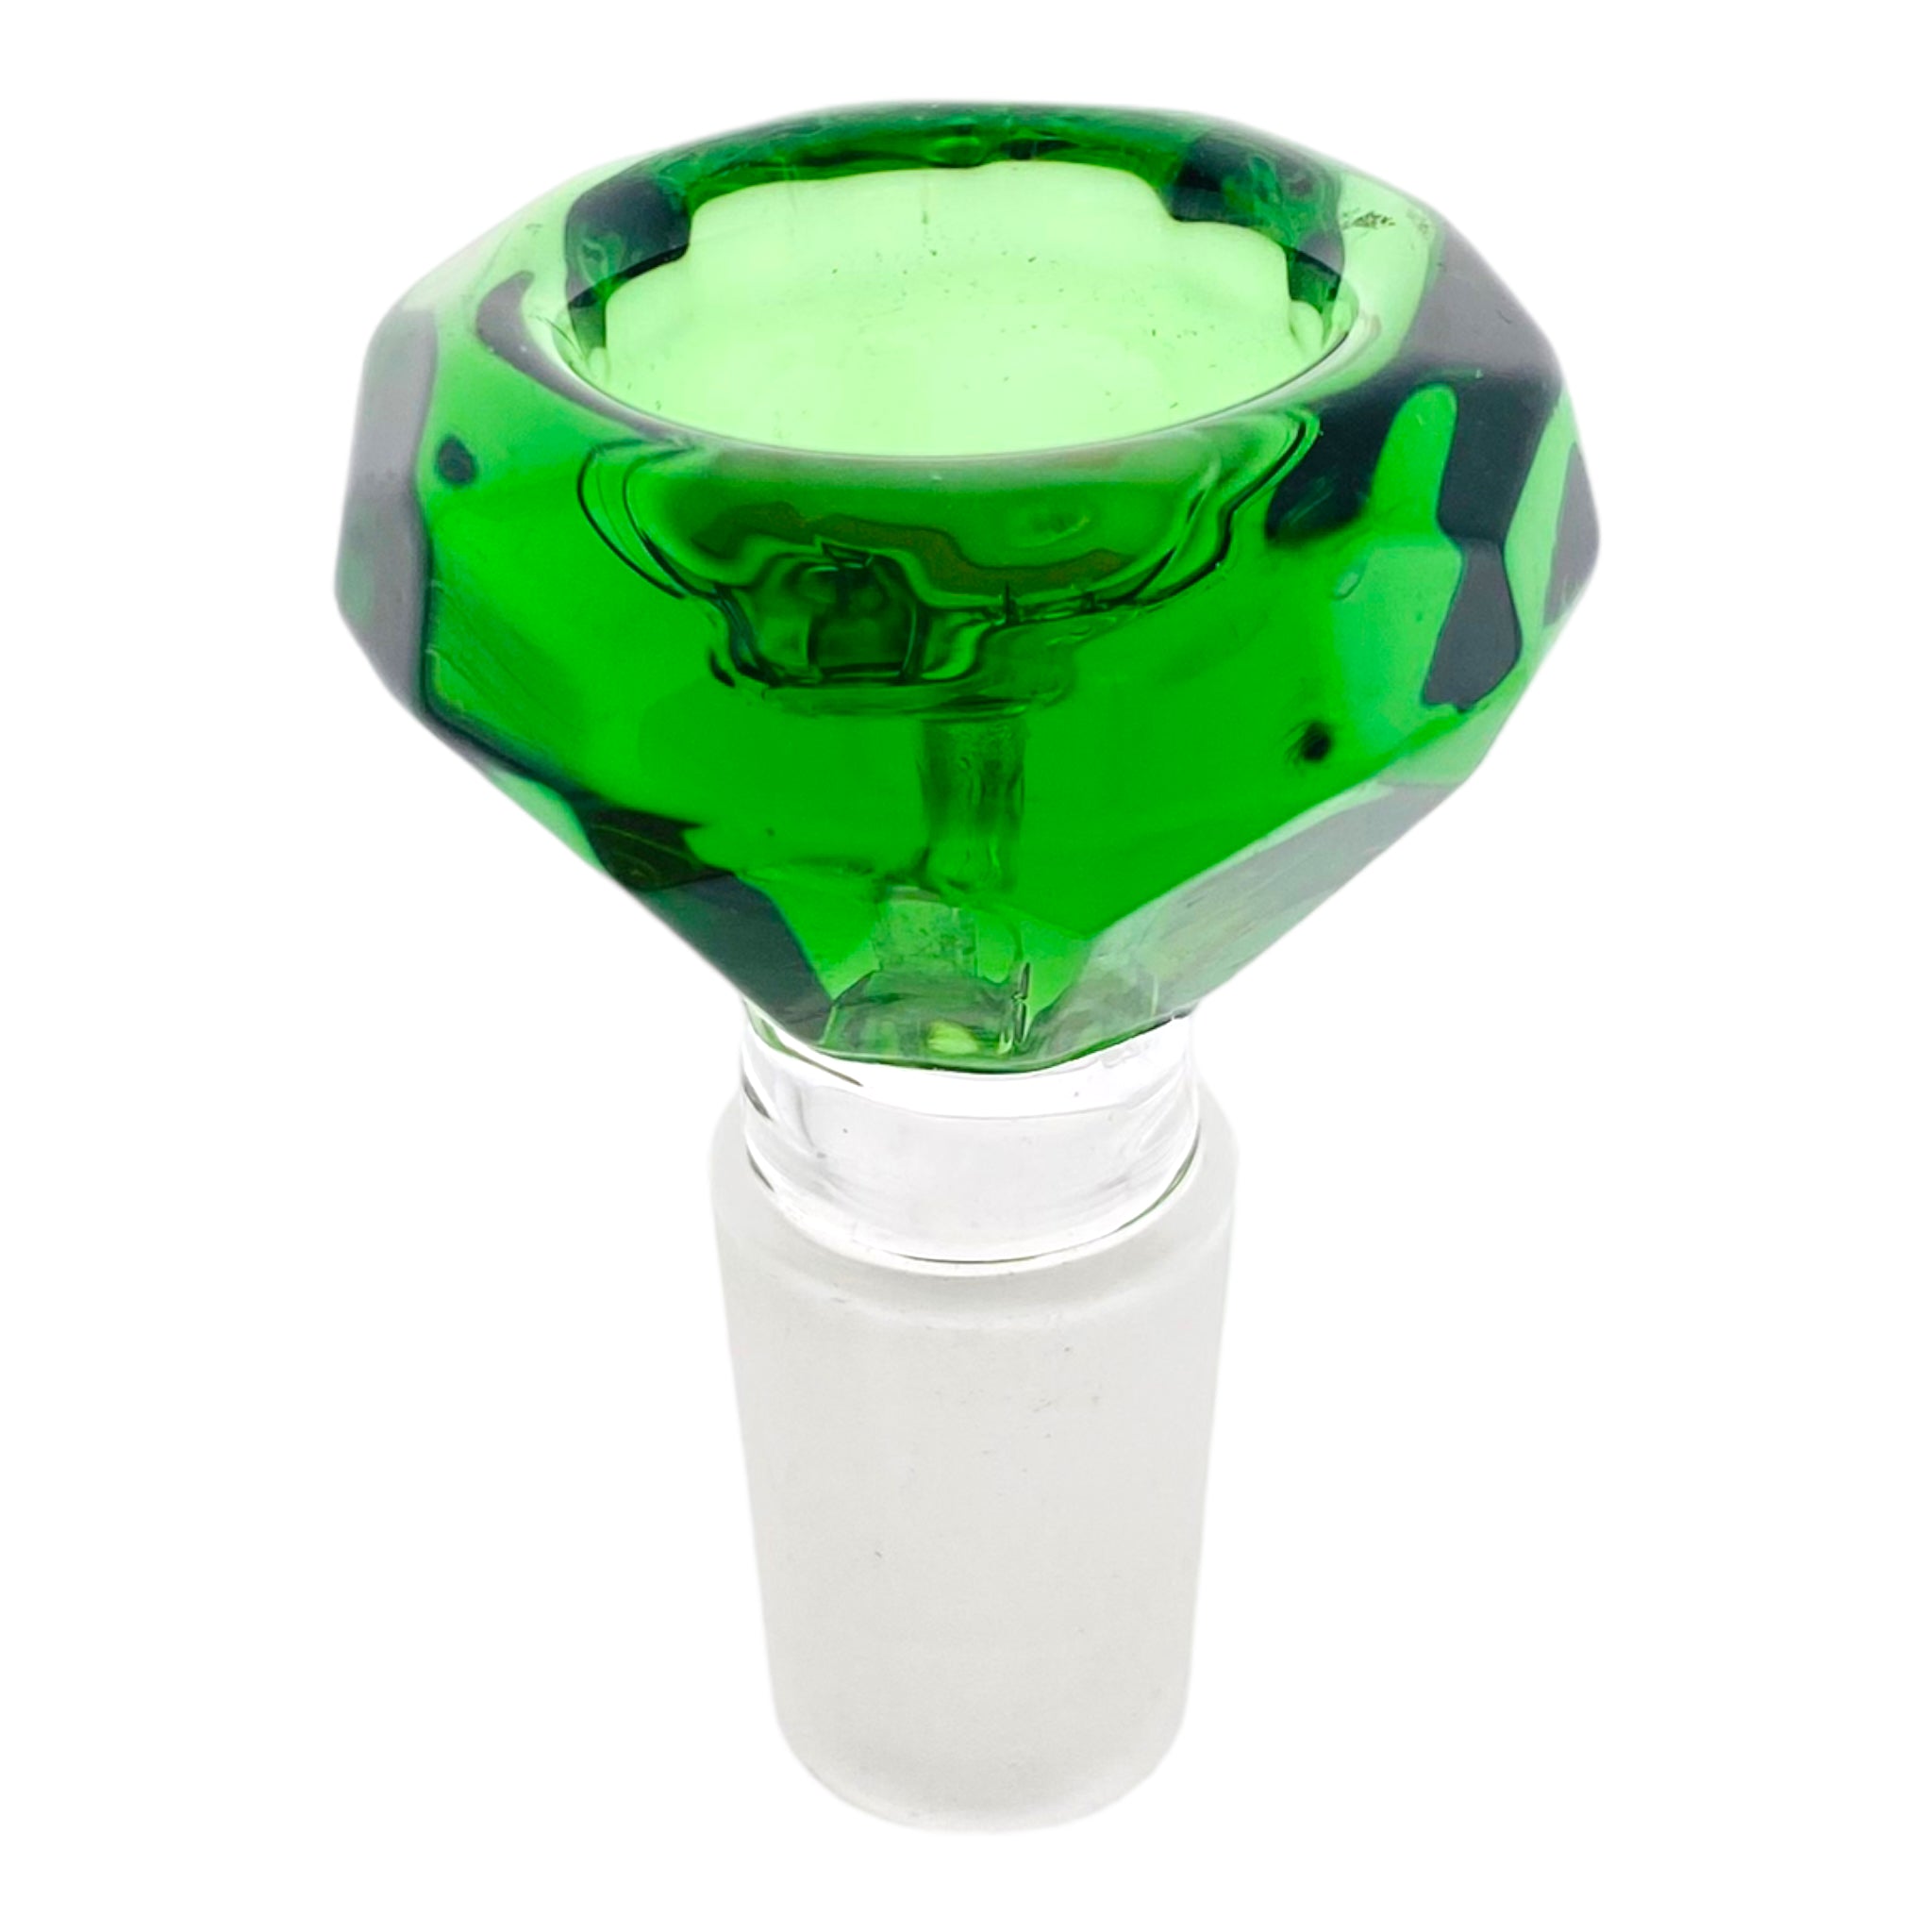 18mm Flower Bowl - Faceted Diamond Glass Bong Bowl Piece - Green